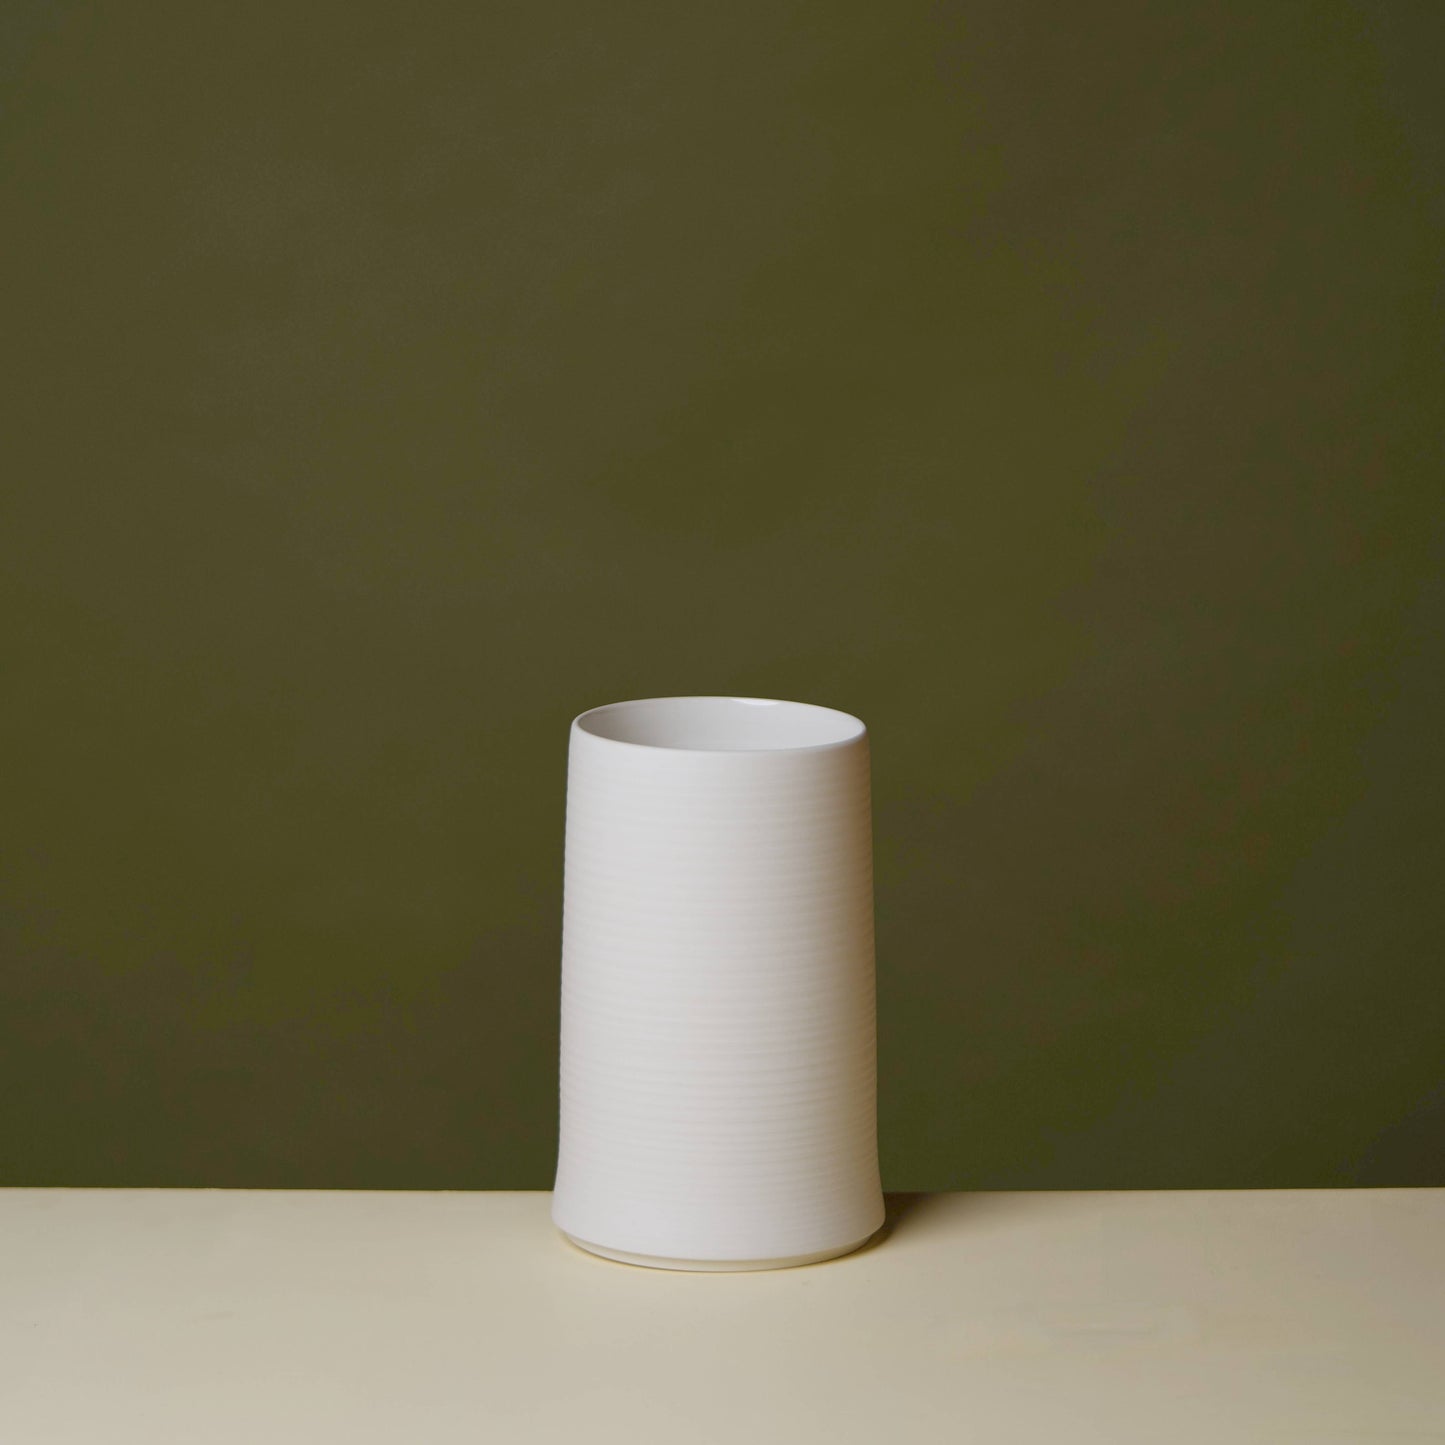 Cold Mountain Matte Porcelain Vase - Small: Butter